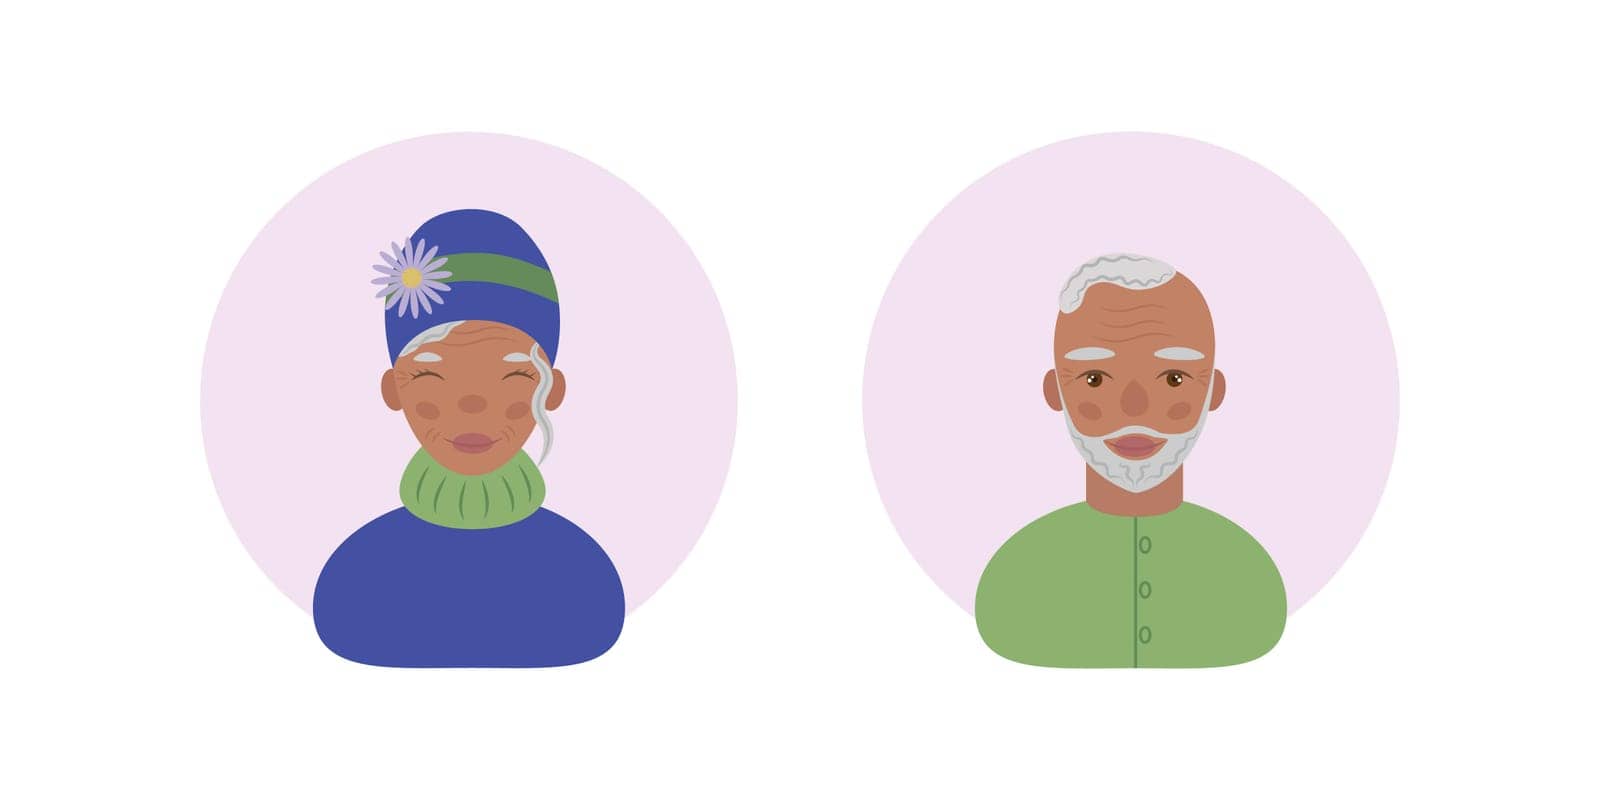 Grandma and grandpa. Avatar of dark-skinned grandparents. Elderly people with gray hair. Vector illustration.